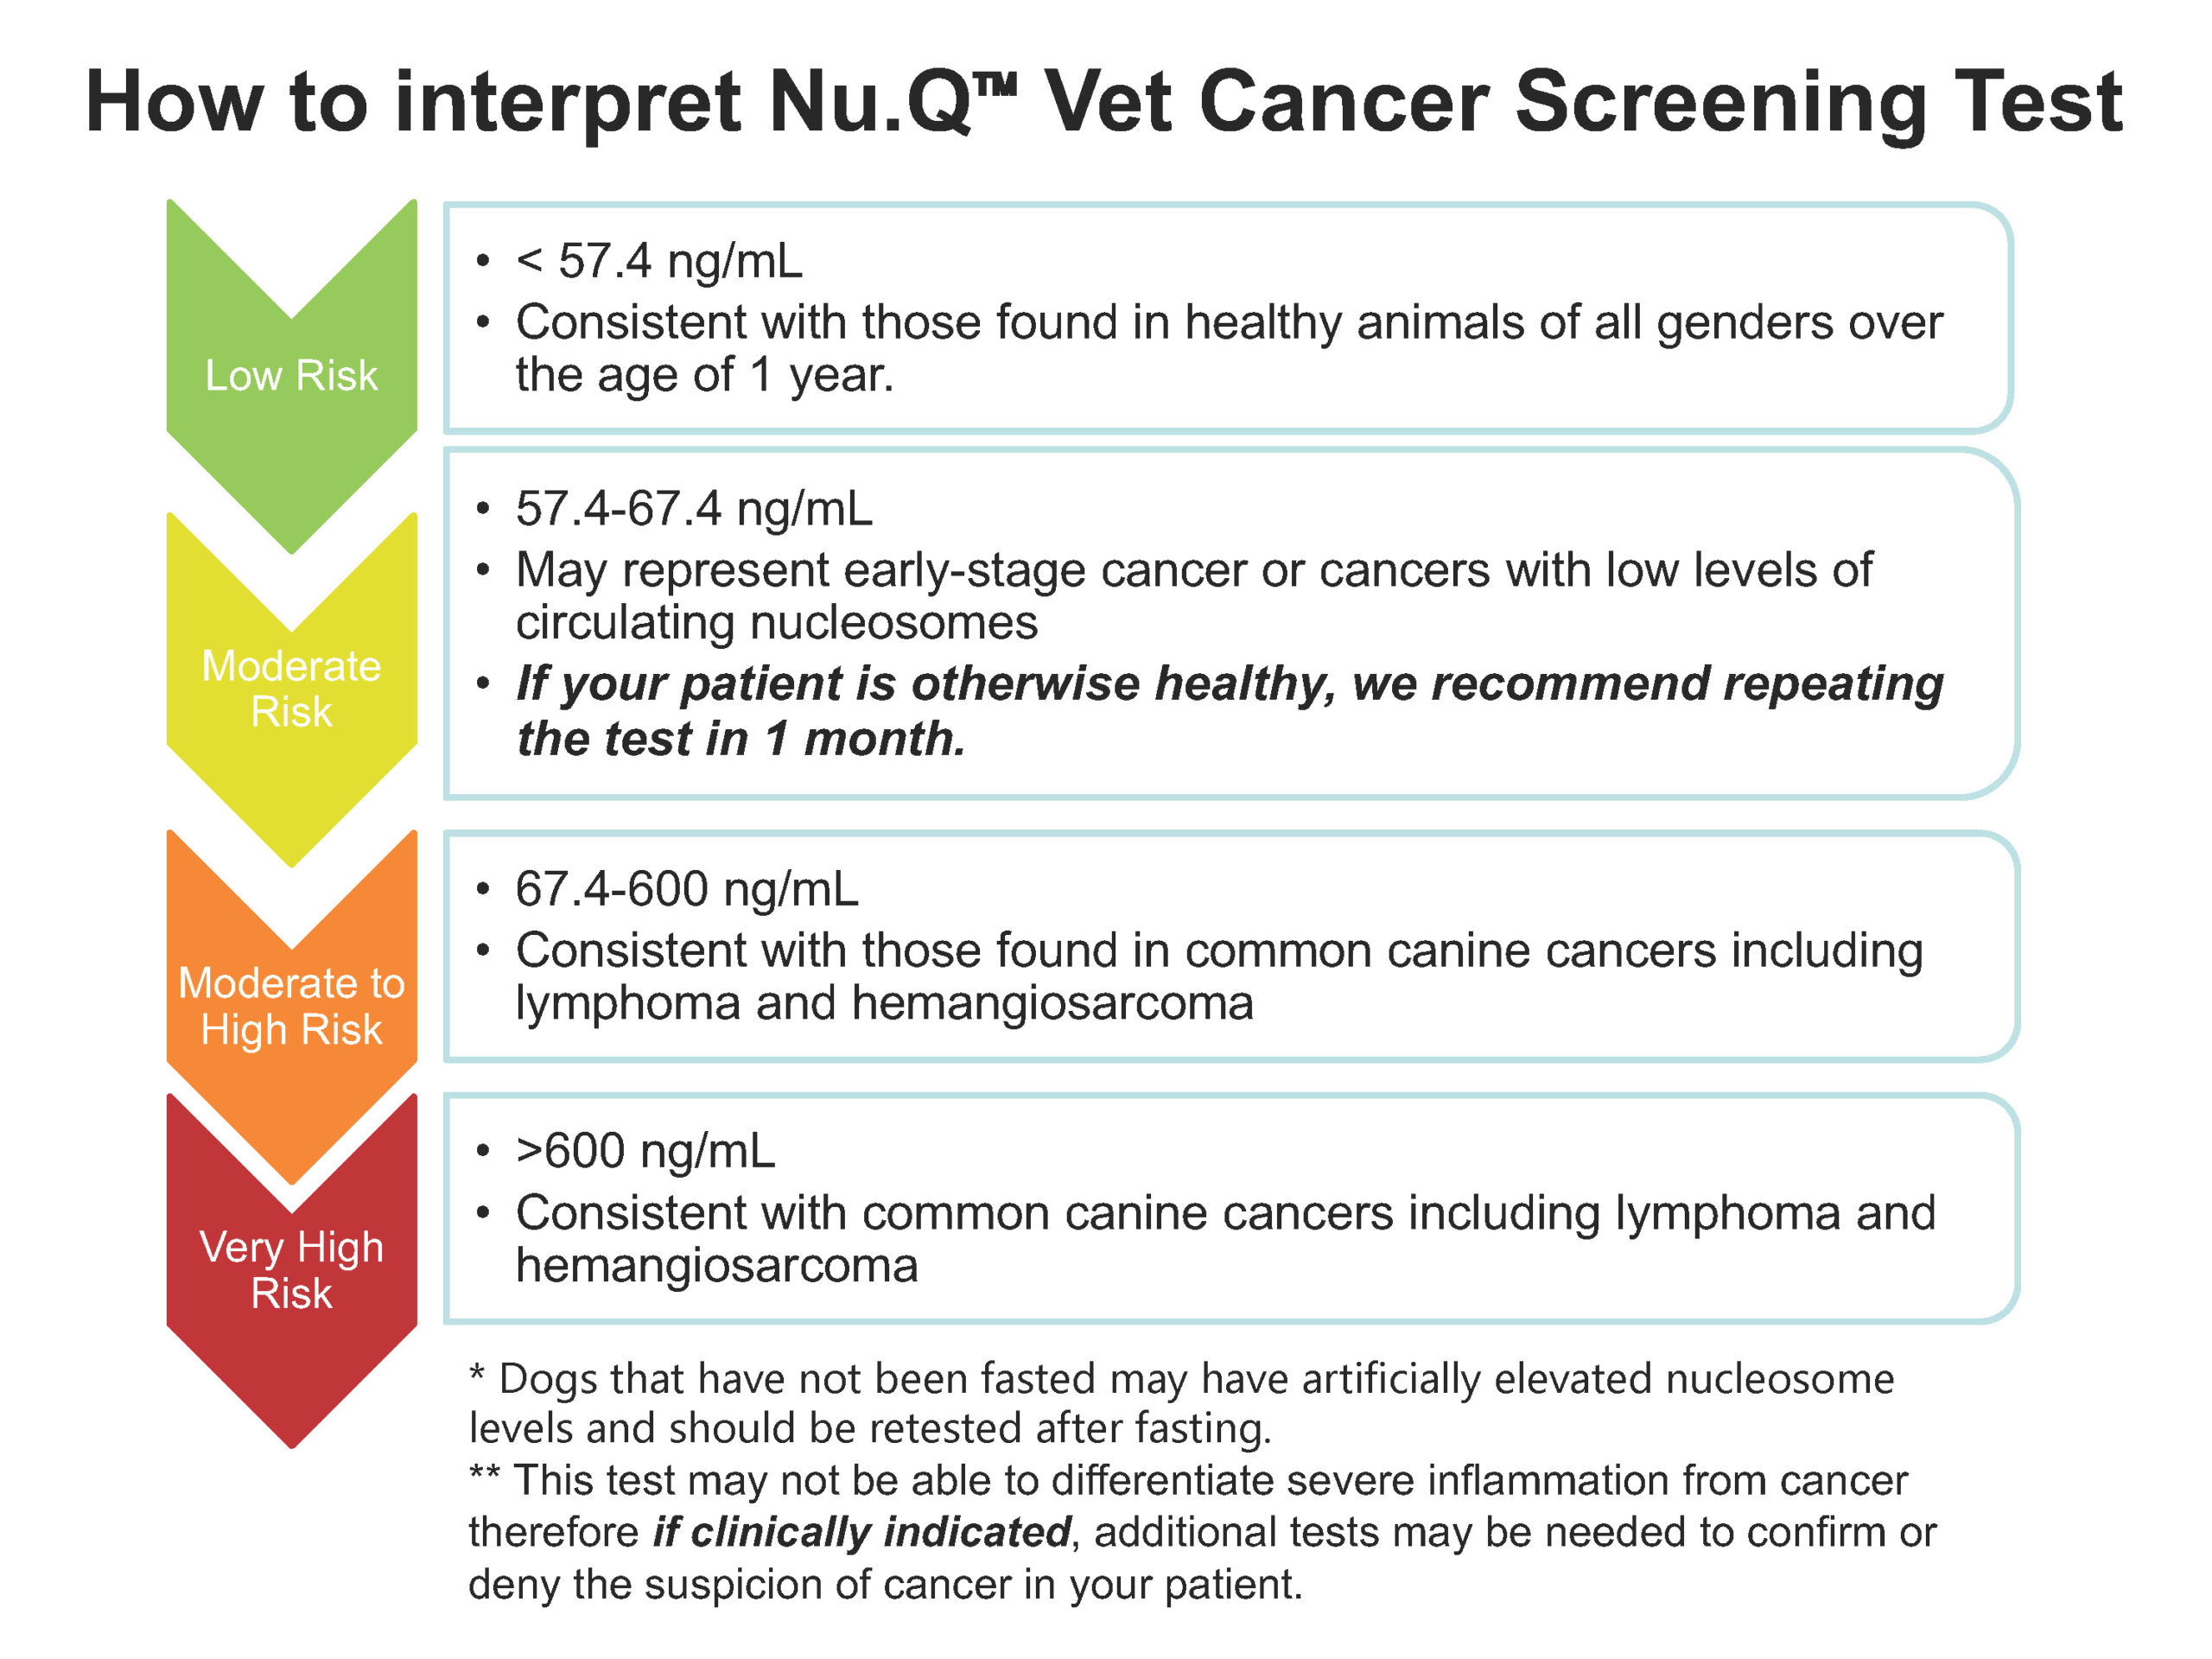 "How to Interpret Nu.Q™ Vet Cancer Screening Test Test Results" diagram